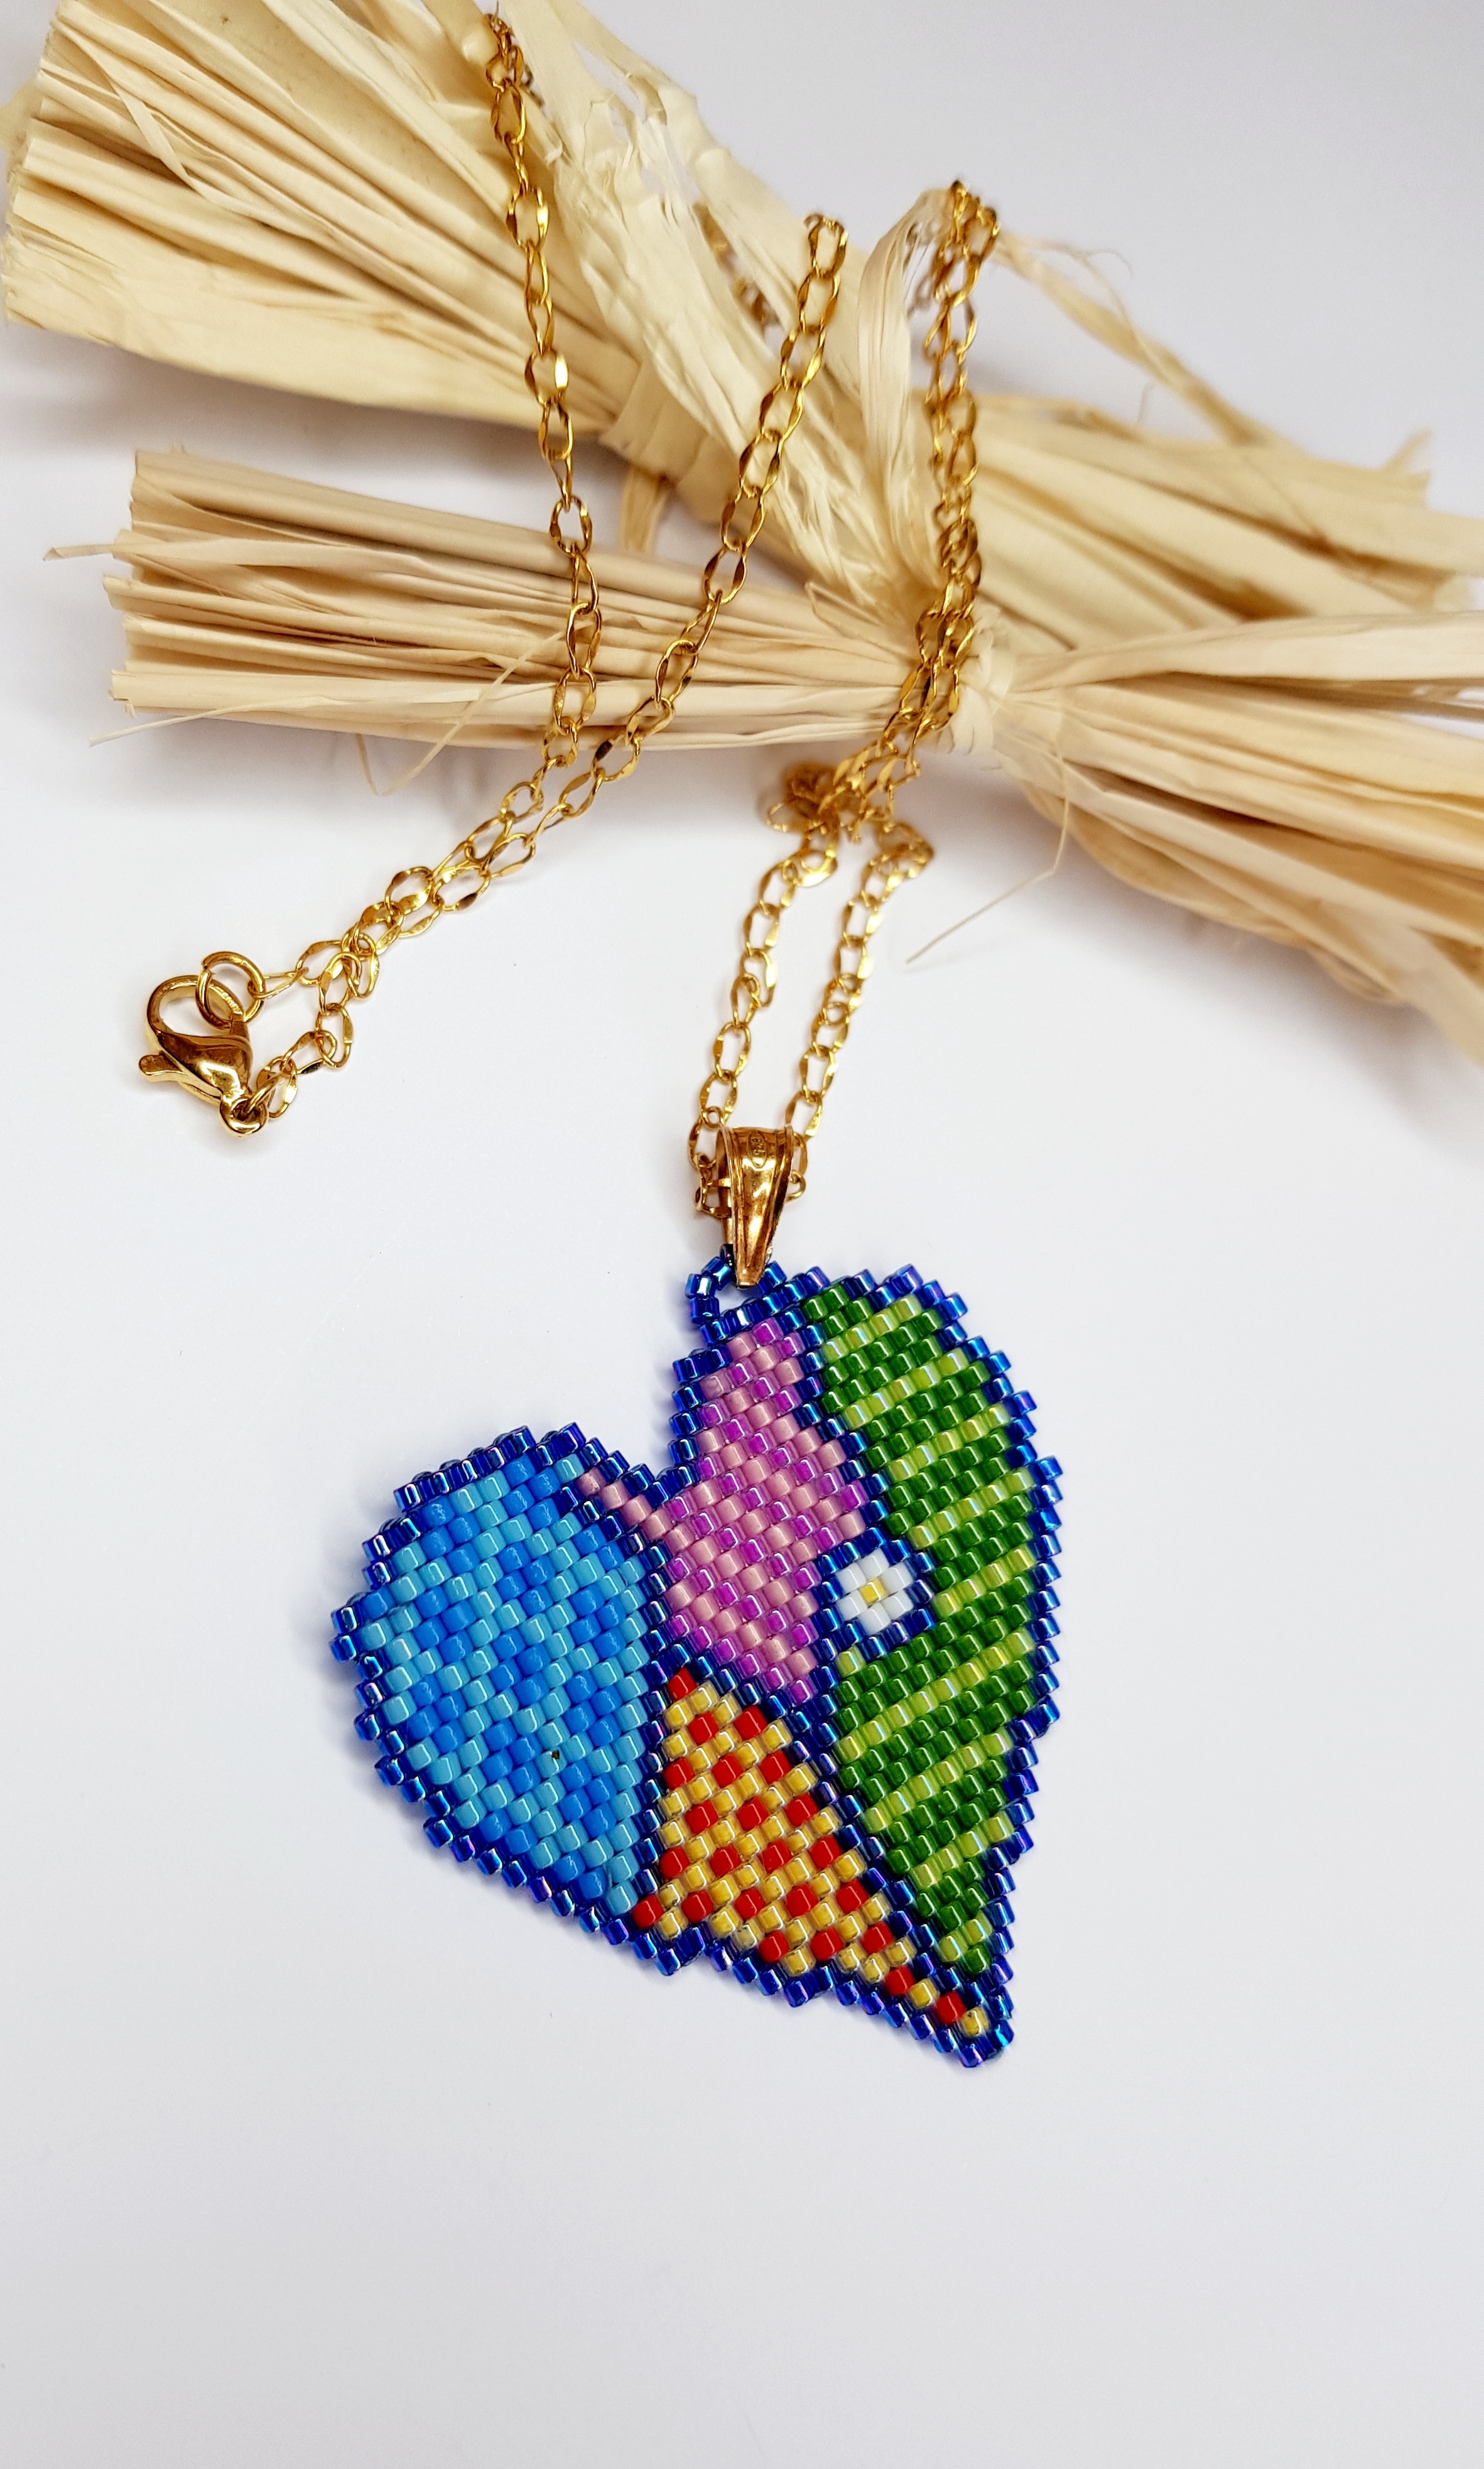 America - Heart pendant necklace